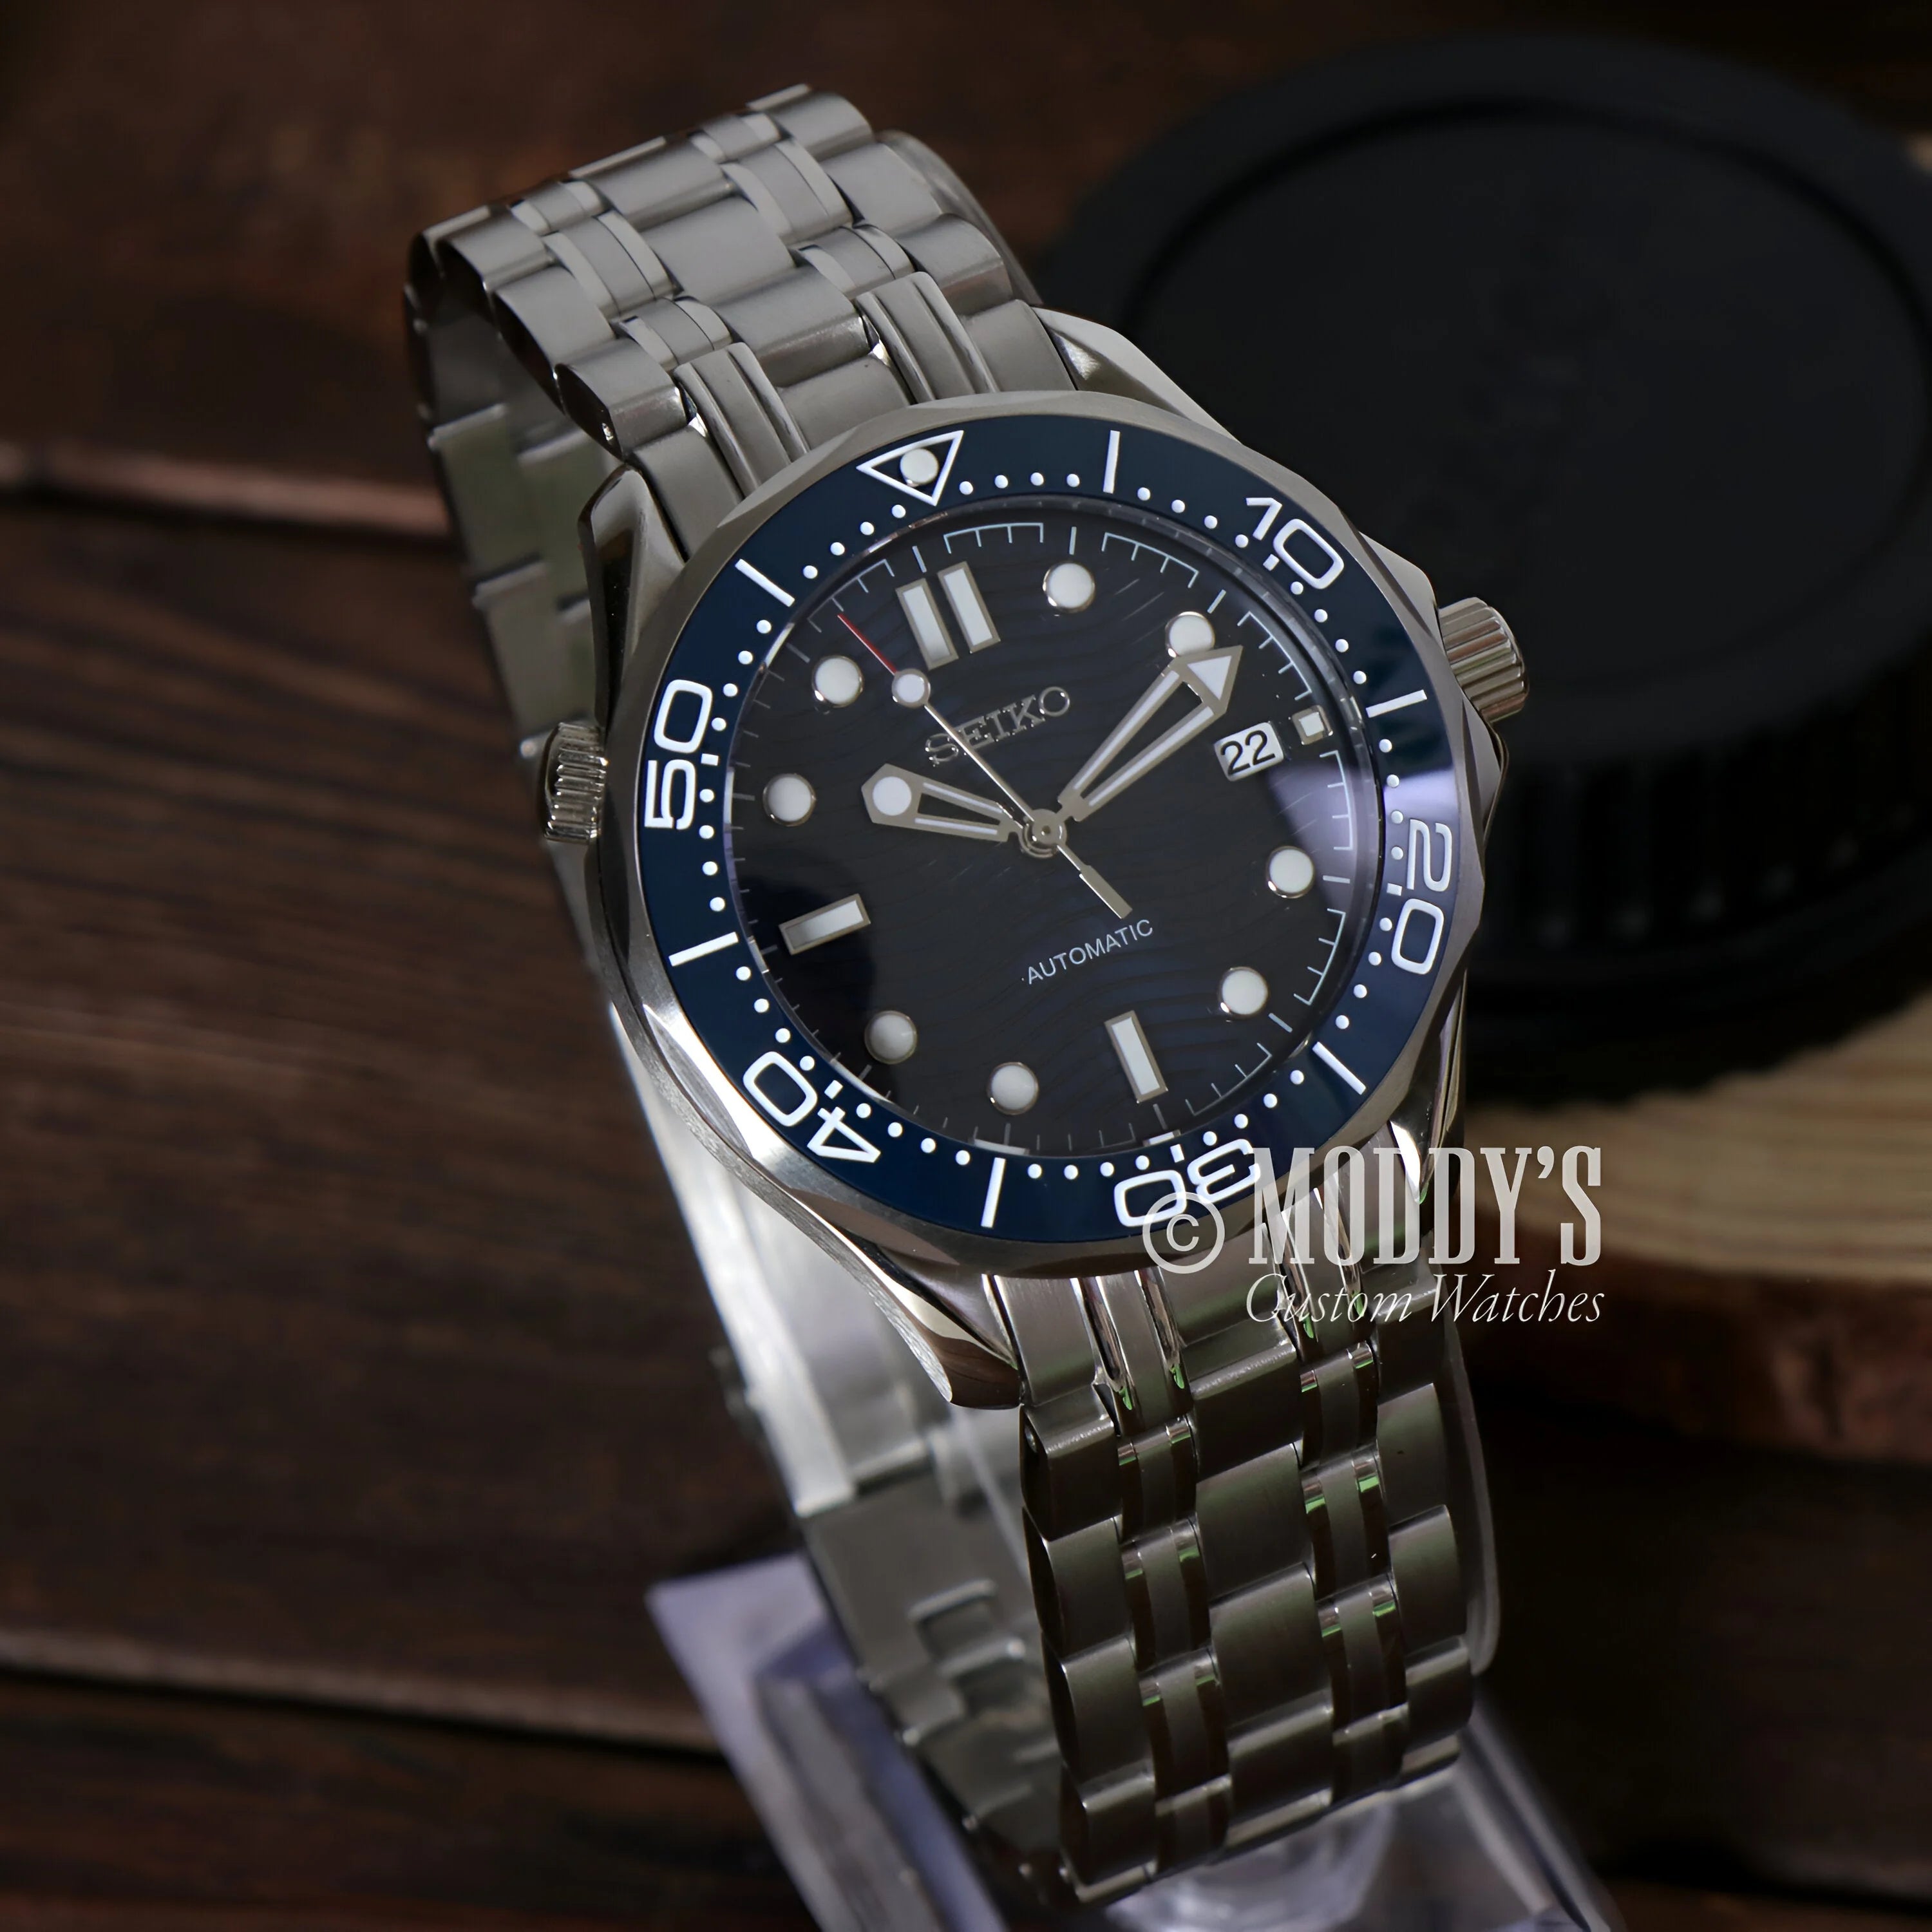 Seikomaster Blue: Seiko Mod Seamaster Blue Dive Watch With Stainless Steel Bracelet